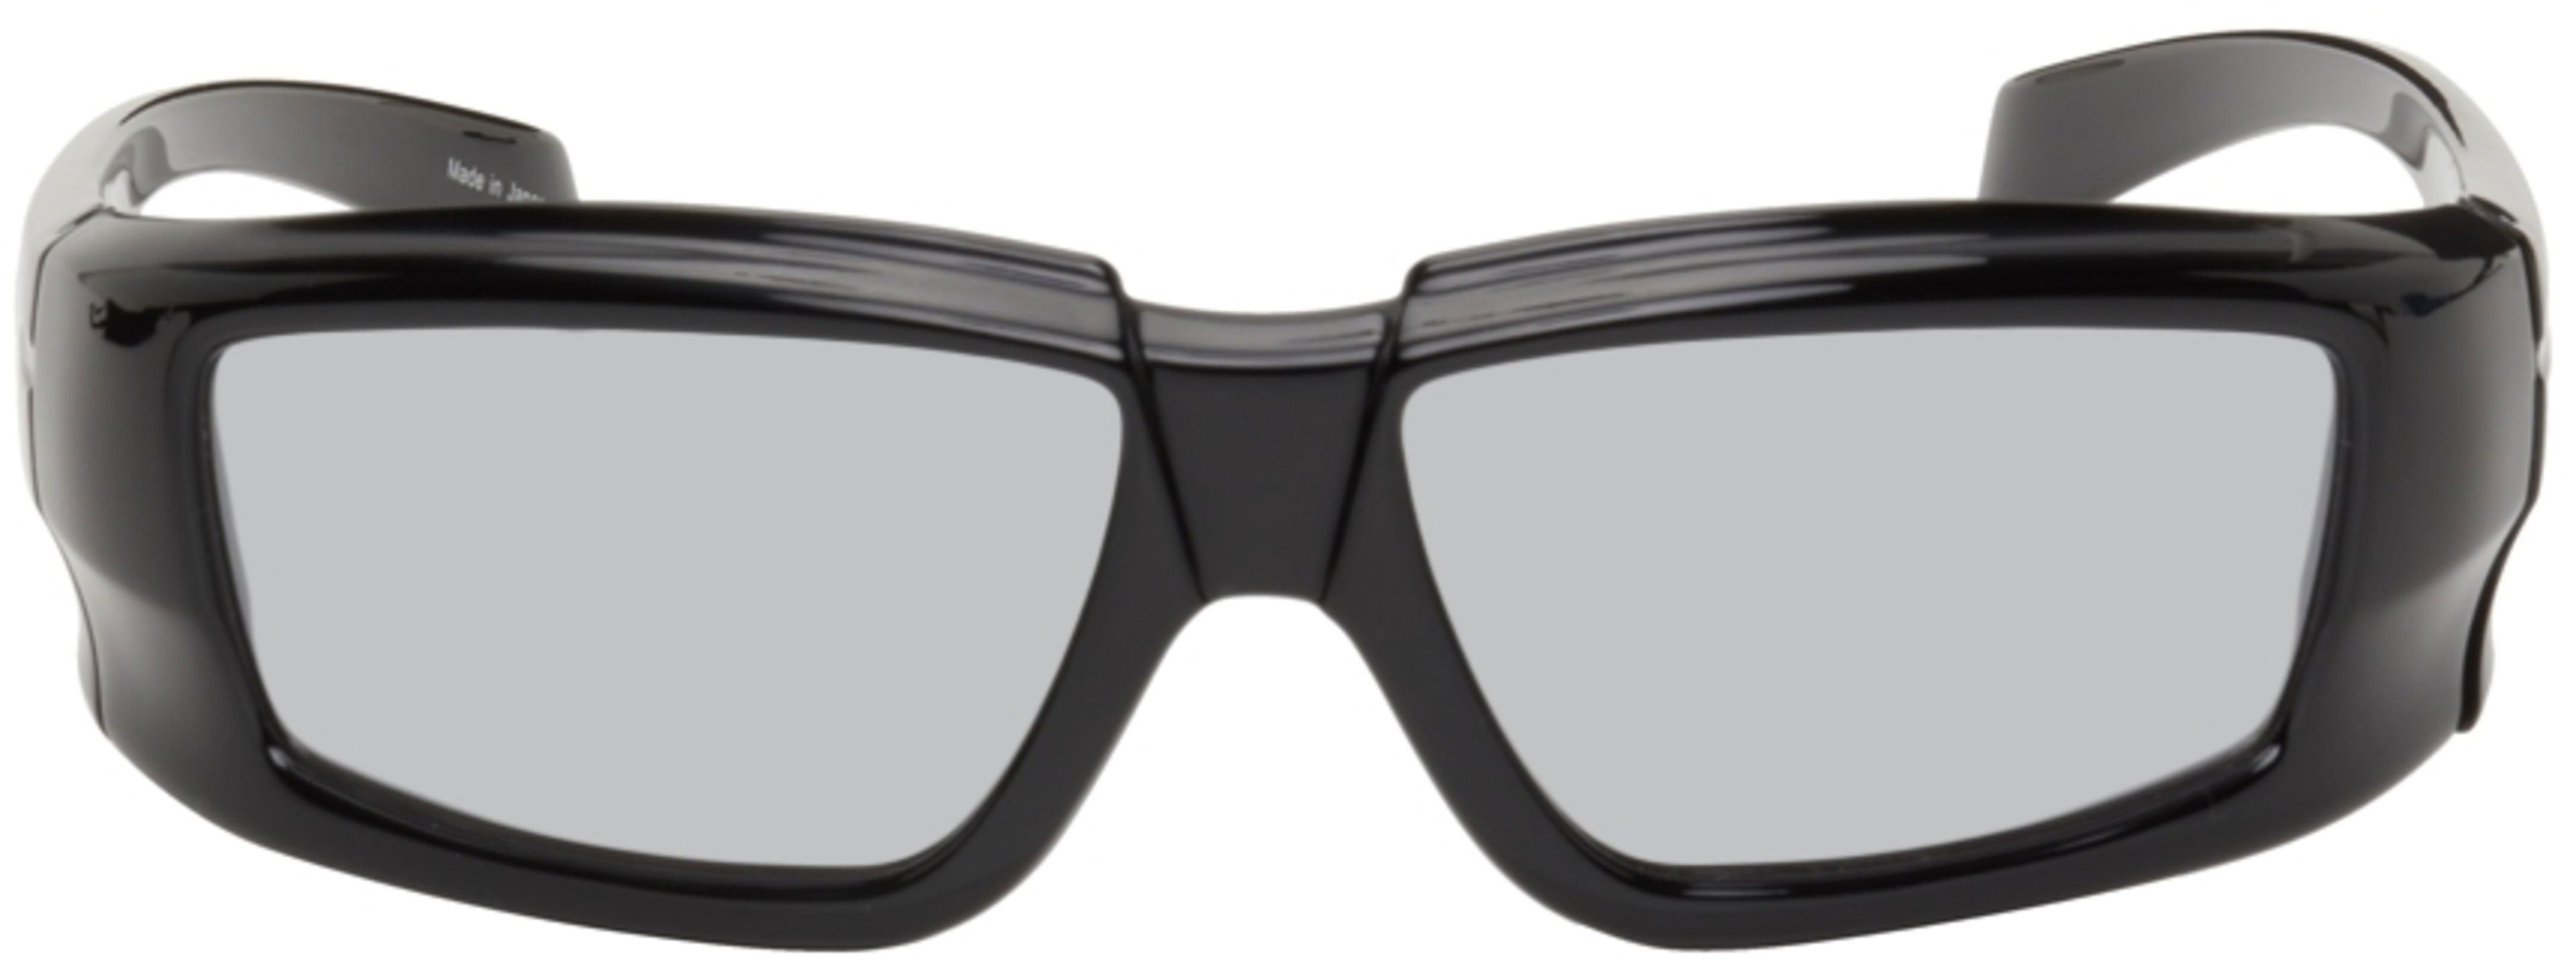 Black & Silver Rick Sunglasses by RICK OWENS